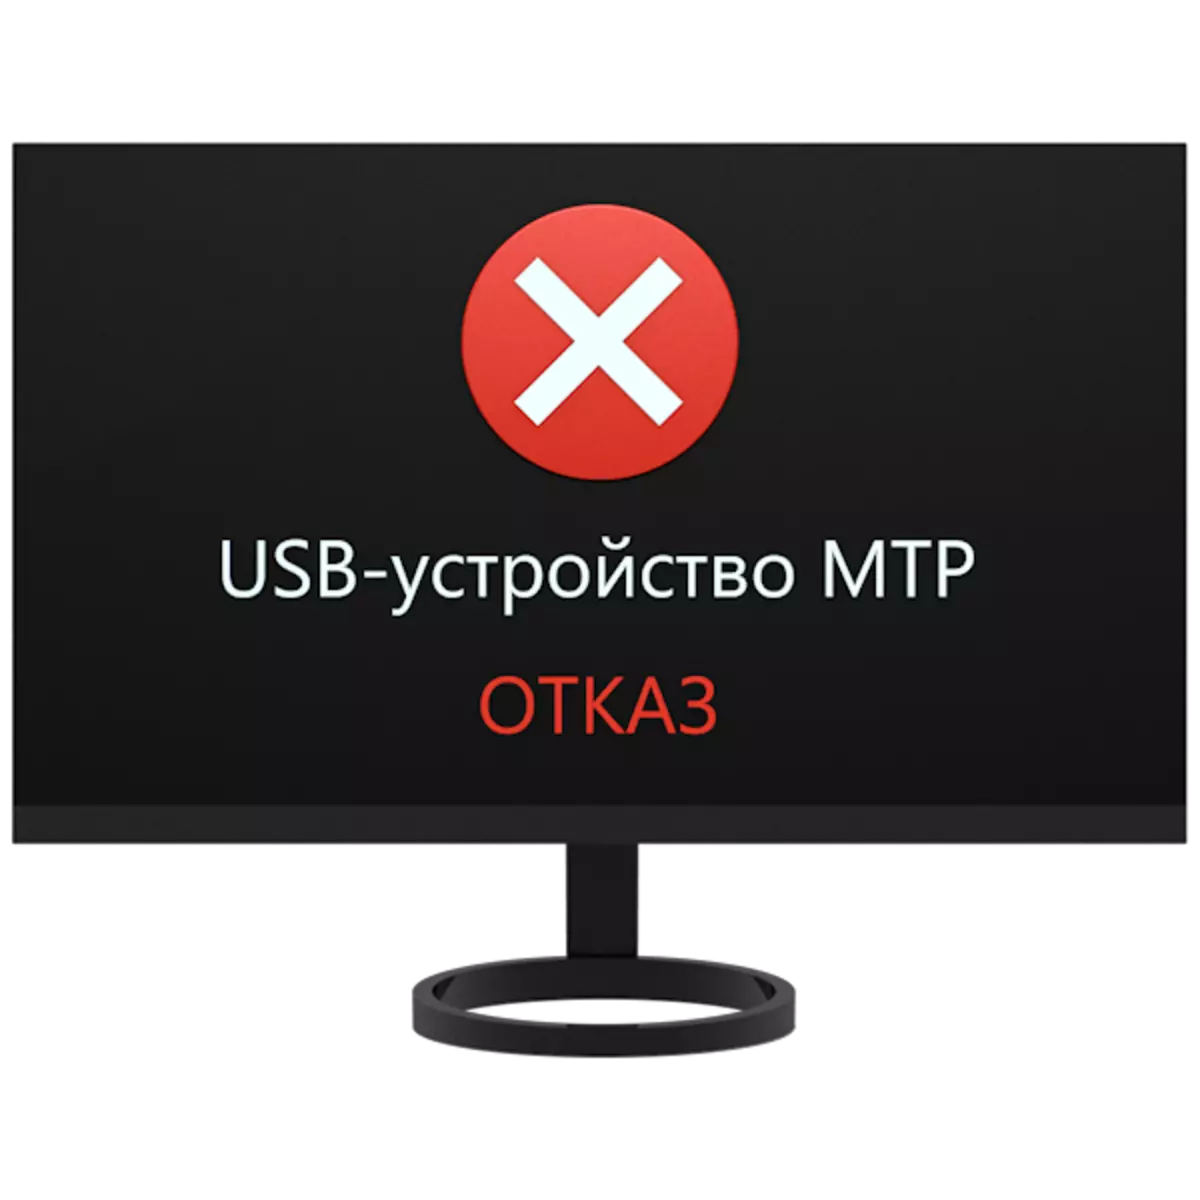 USB အမှားကိုမည်သို့ဖြေရှင်းရမည် - MTP ကိရိယာ - ပျက်ကွက်ခြင်း